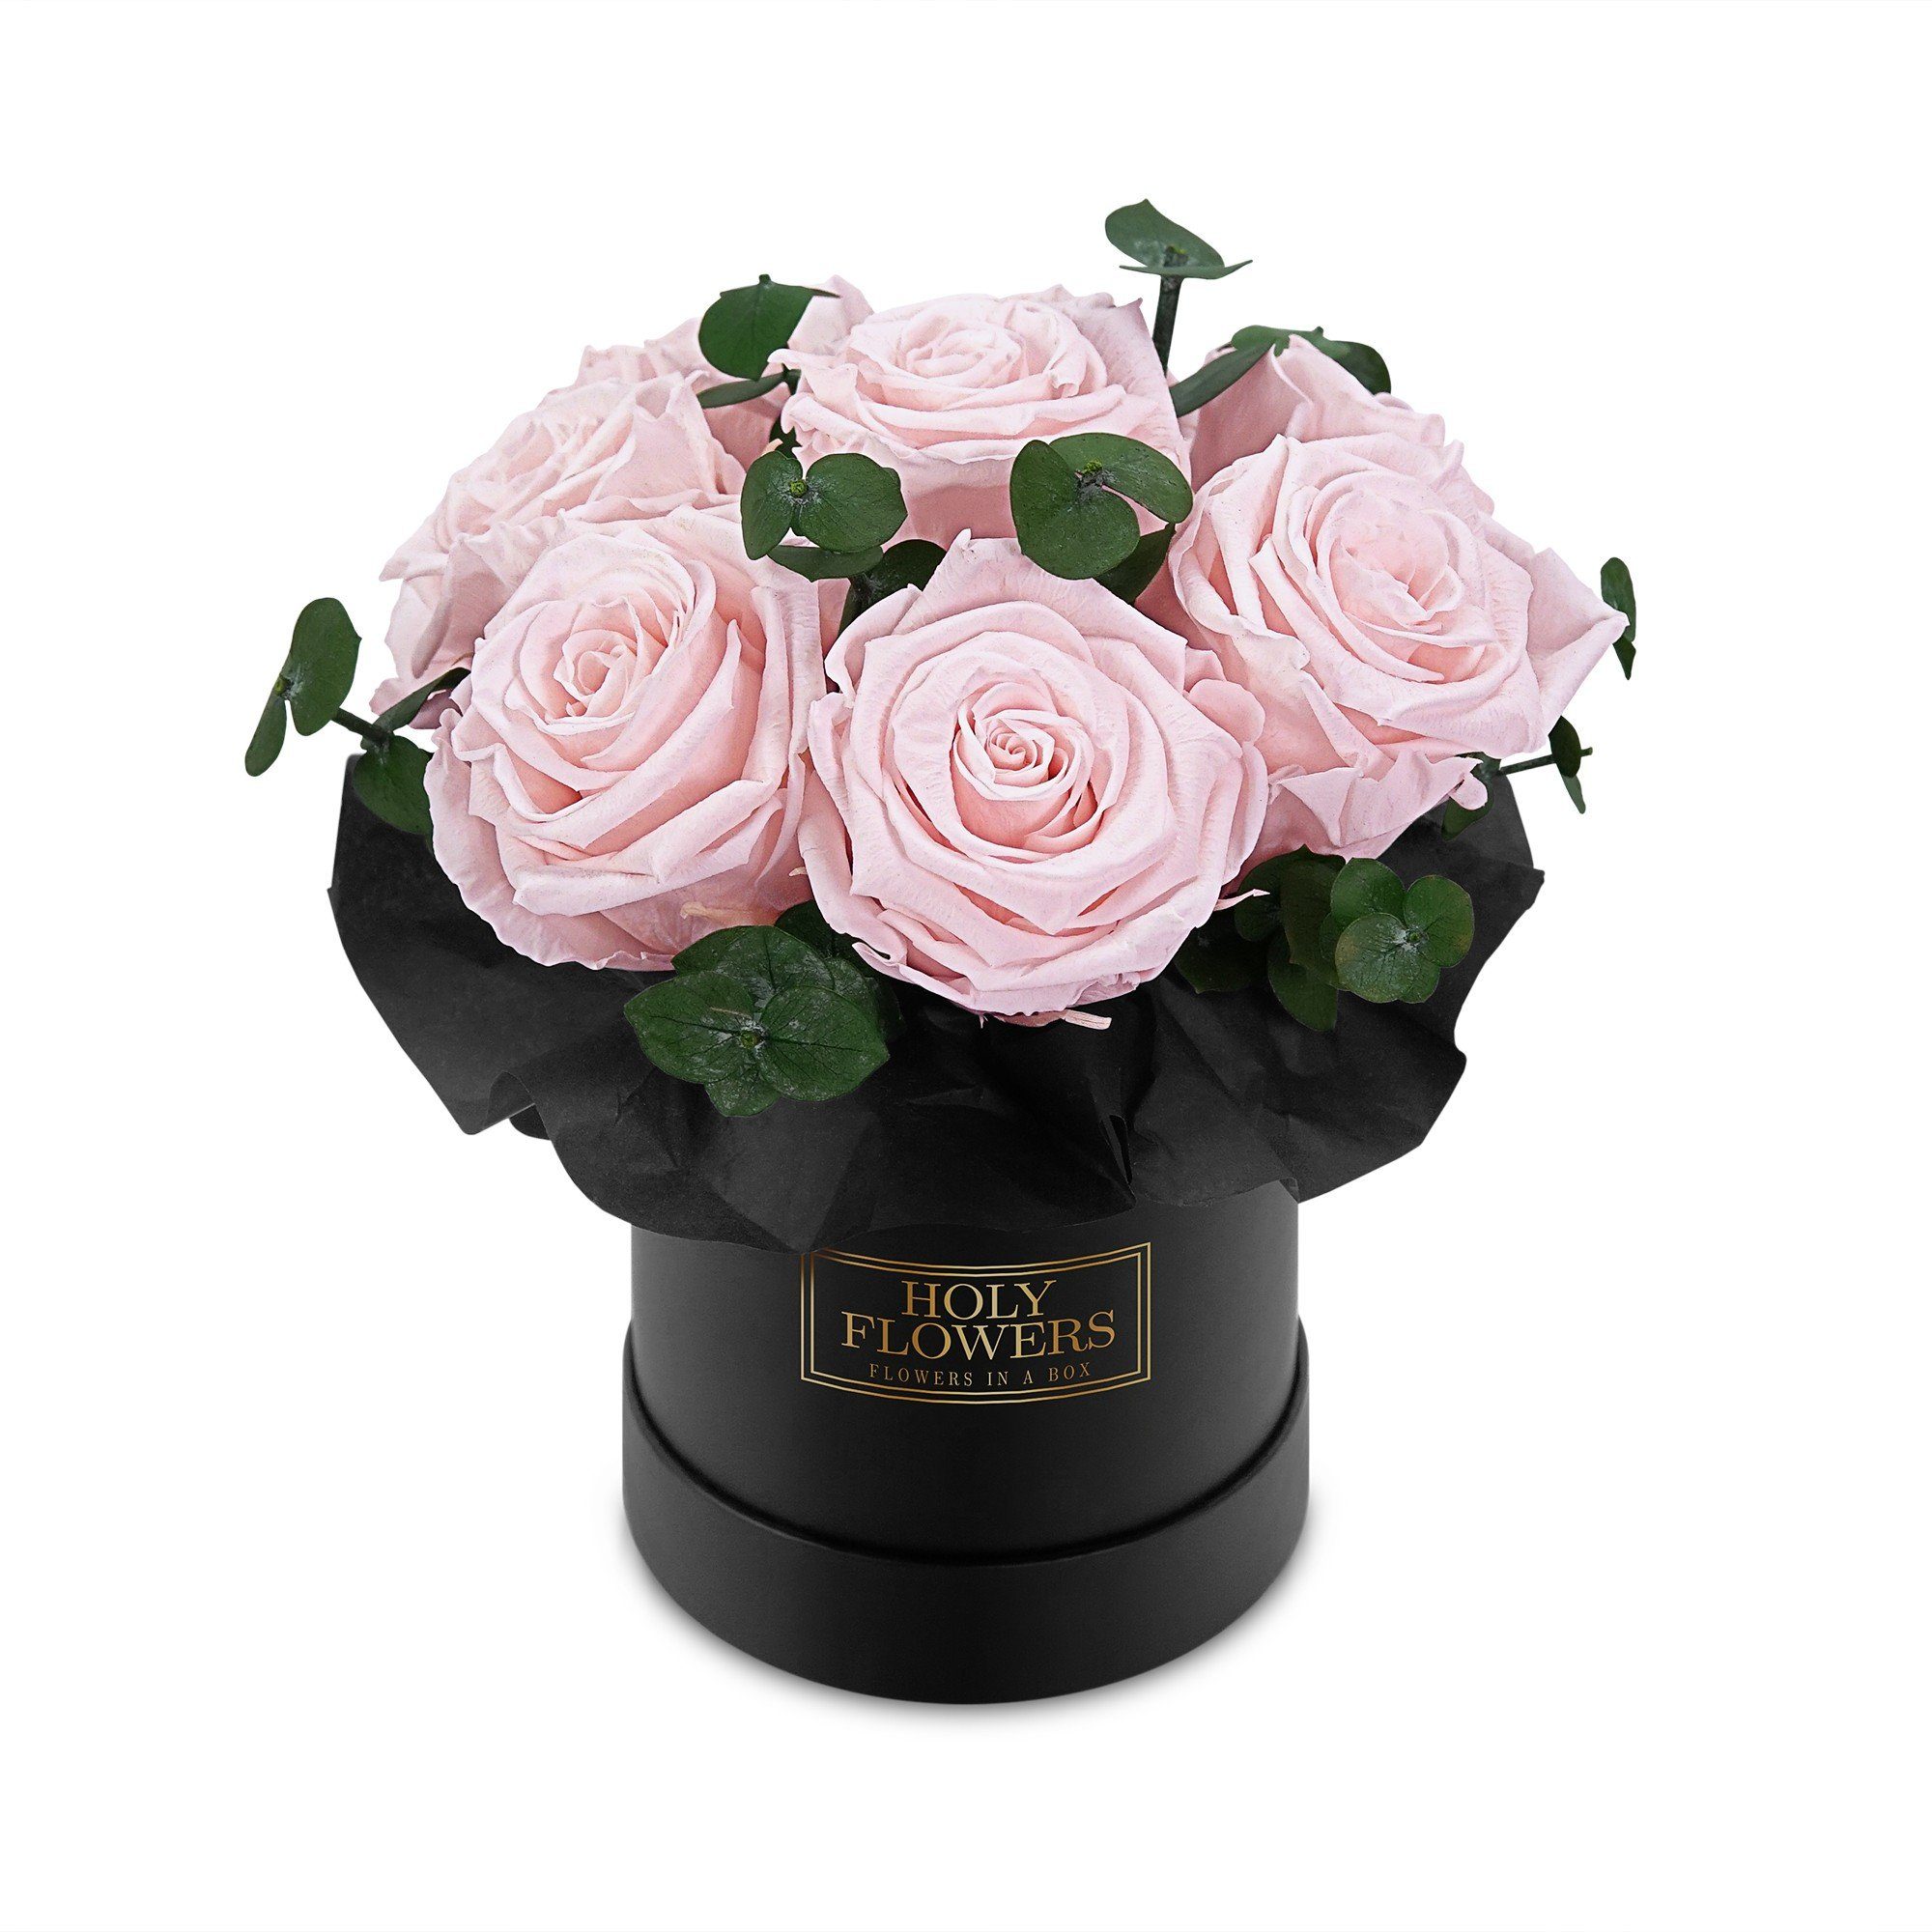 Kunstblume Rosenbox Bouquet mit 7-9 Infinity Rosen I 3 Jahre haltbar I Echte, duftende konservierte Blumen I by Raul Richter Rose, Holy Flowers Hellrosa